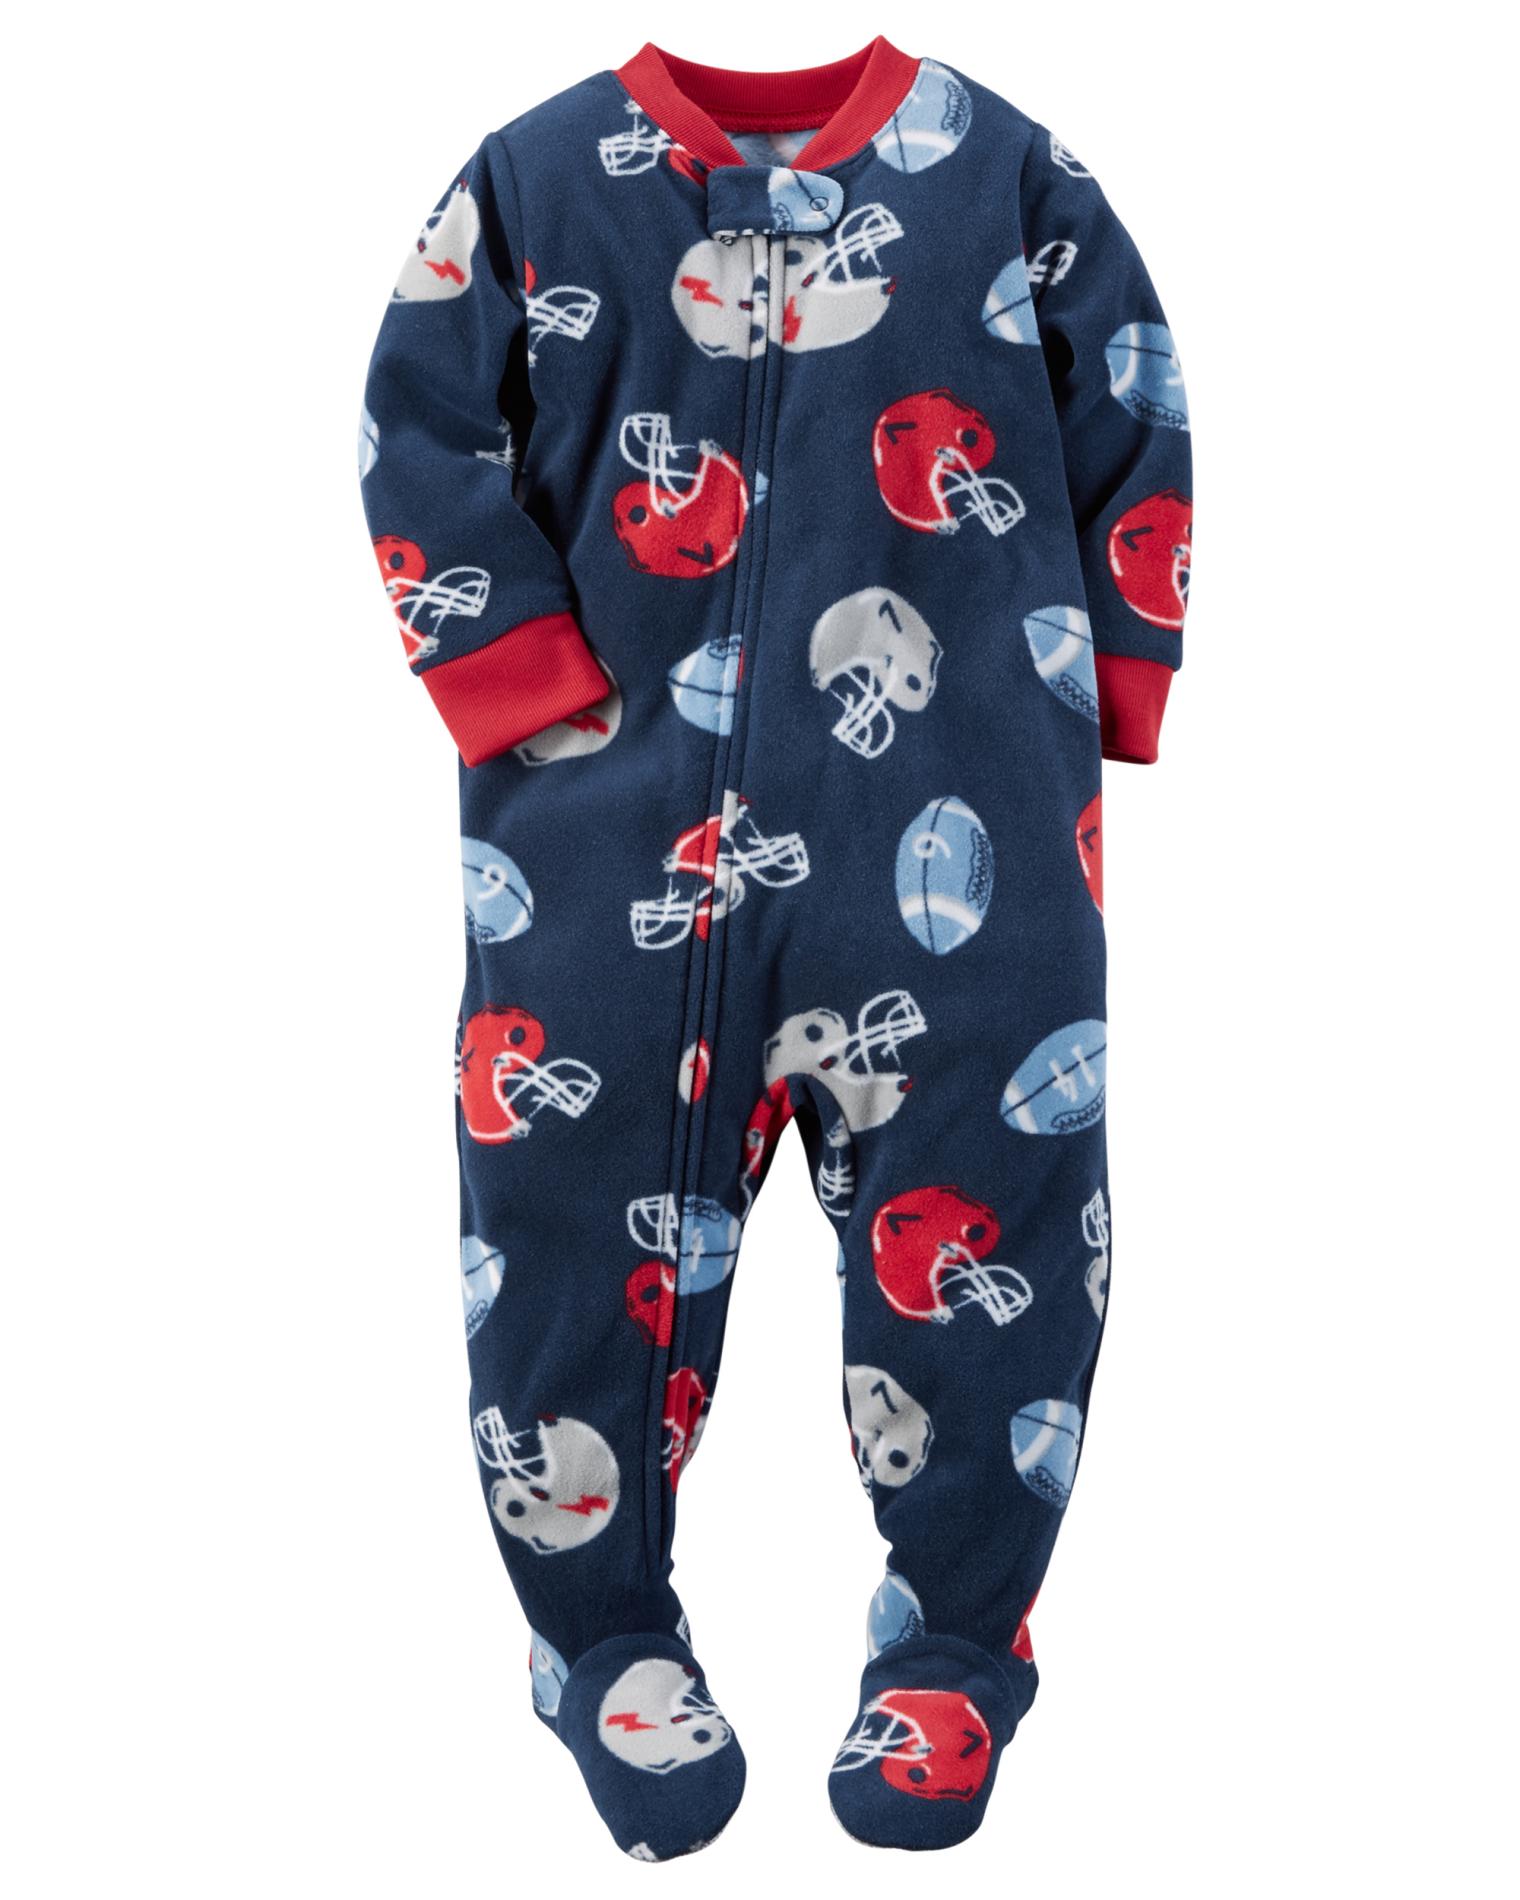 Carter's Infant & Toddler Boys' Fleece Sleeper Pajamas - Football